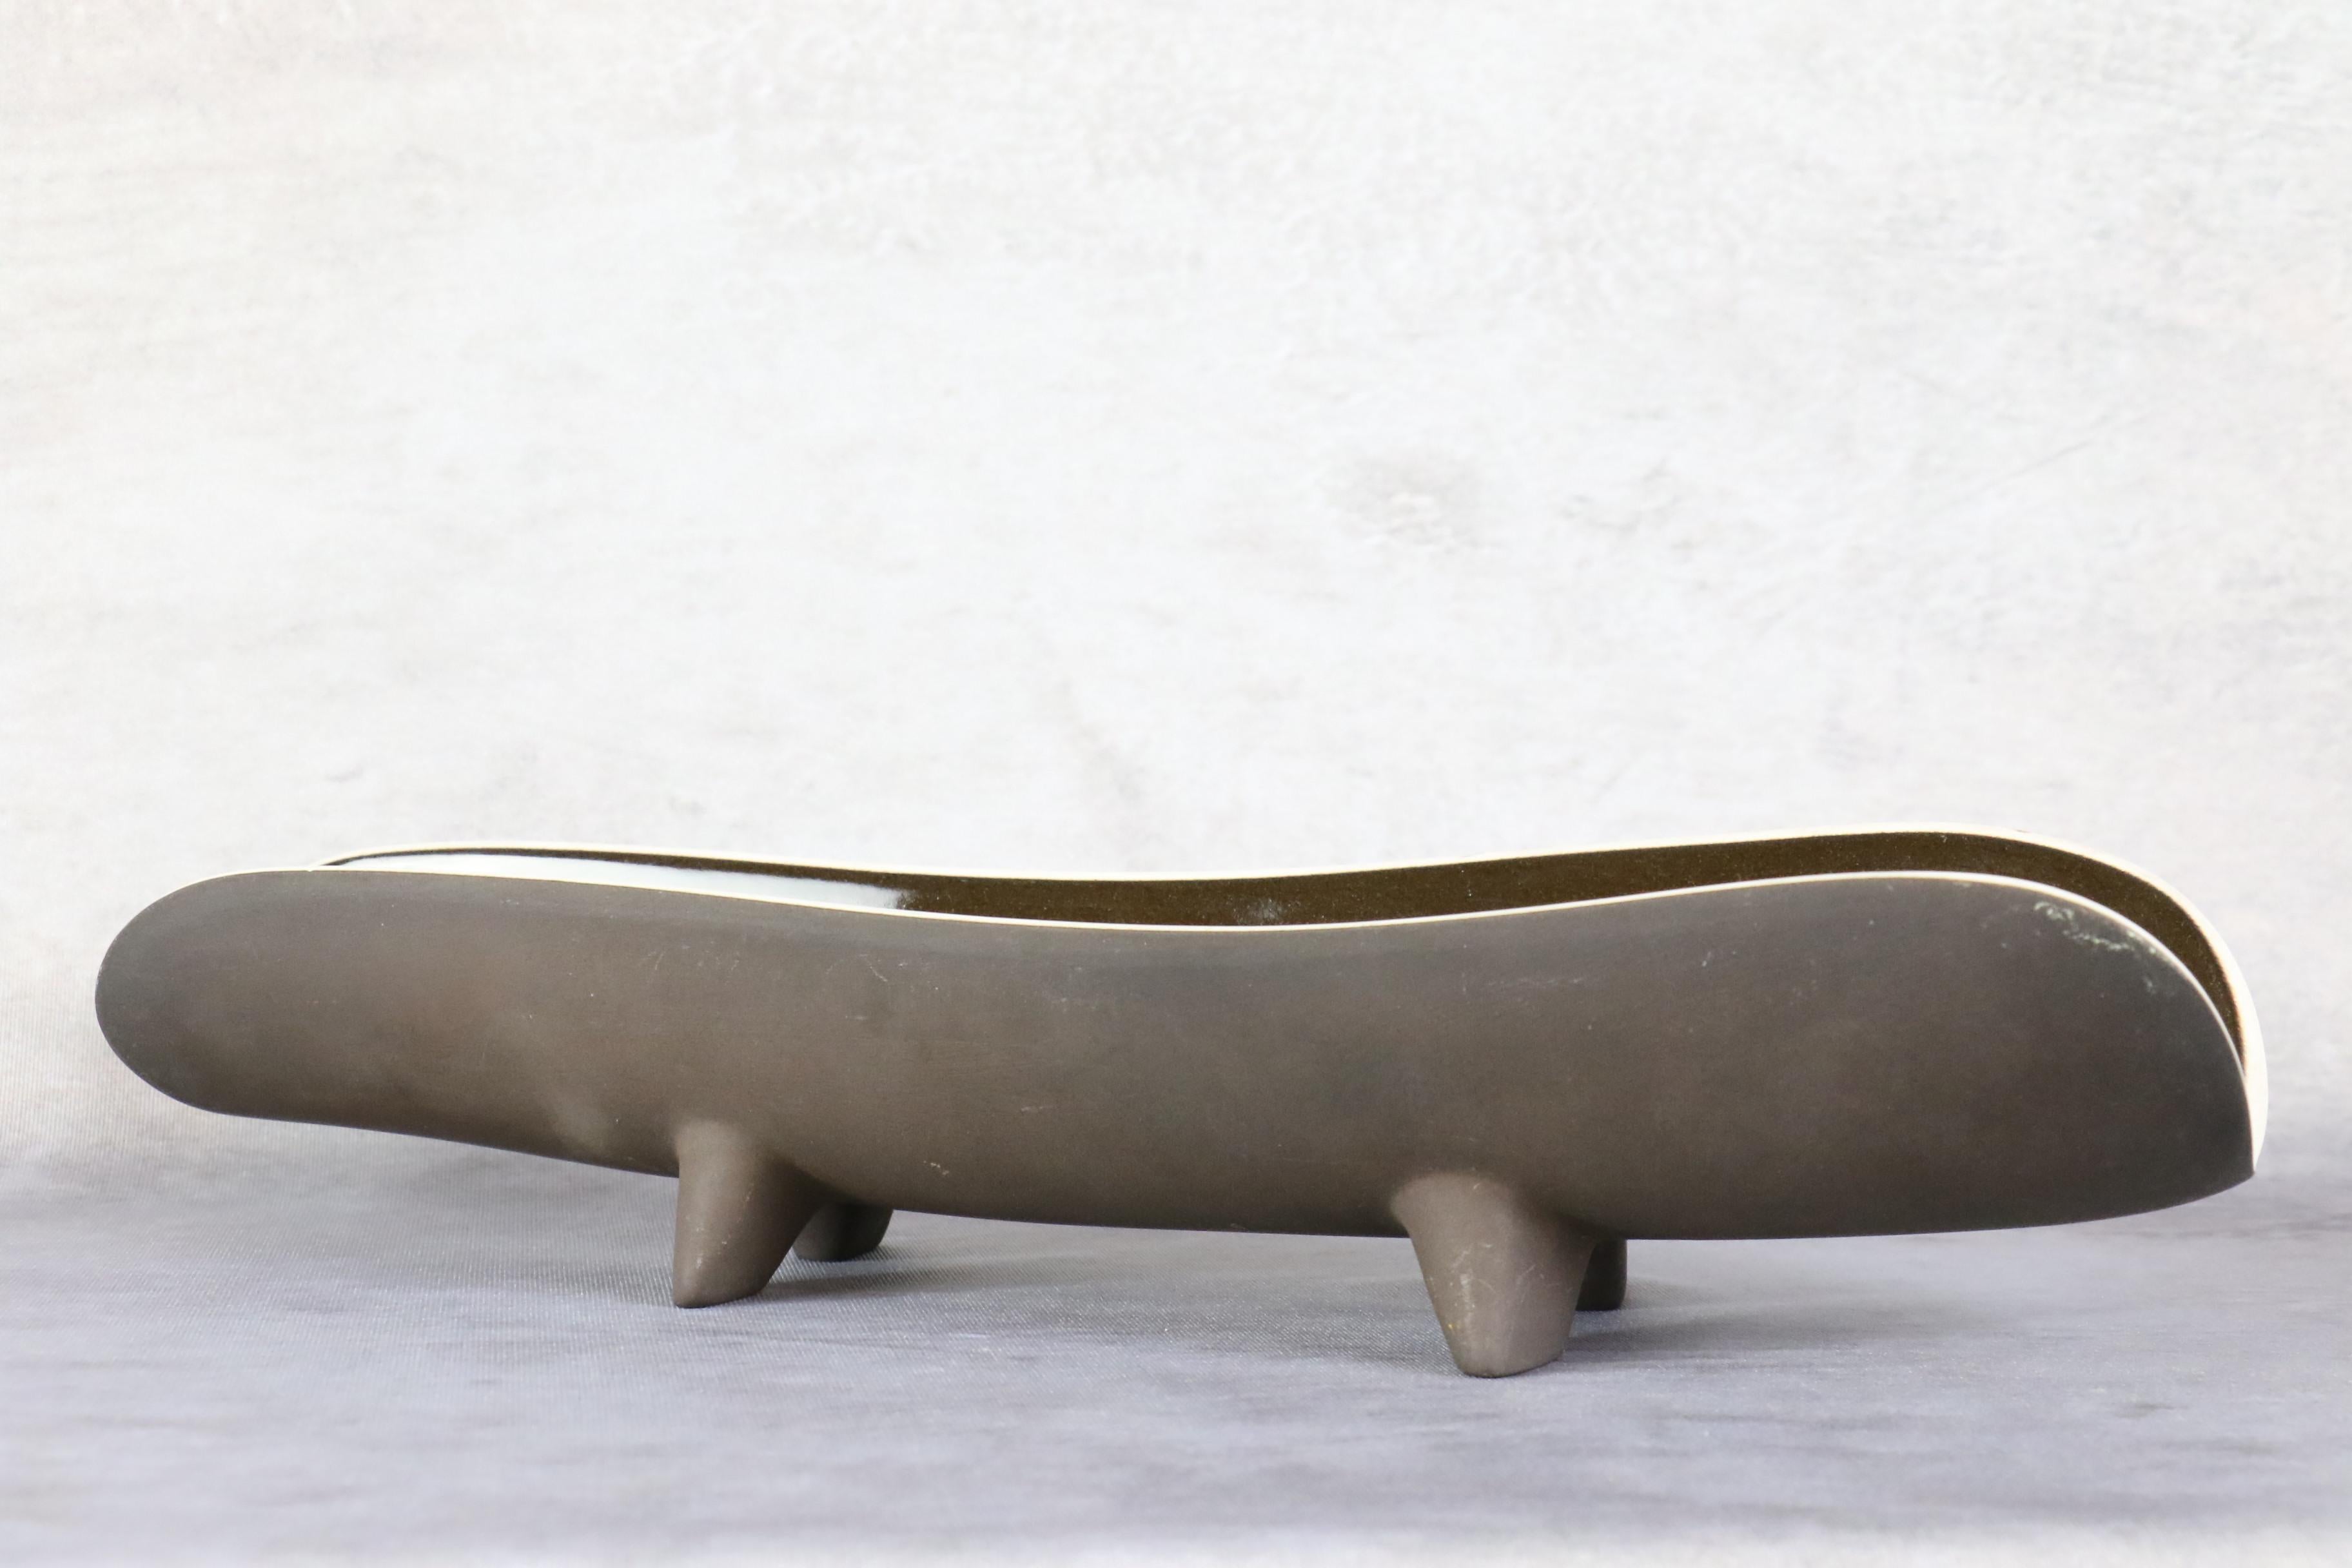 20th Century Long ceramic bowl by Jaap Ravelli - 1960 - Netherlands - Scandinavian ceramics   For Sale